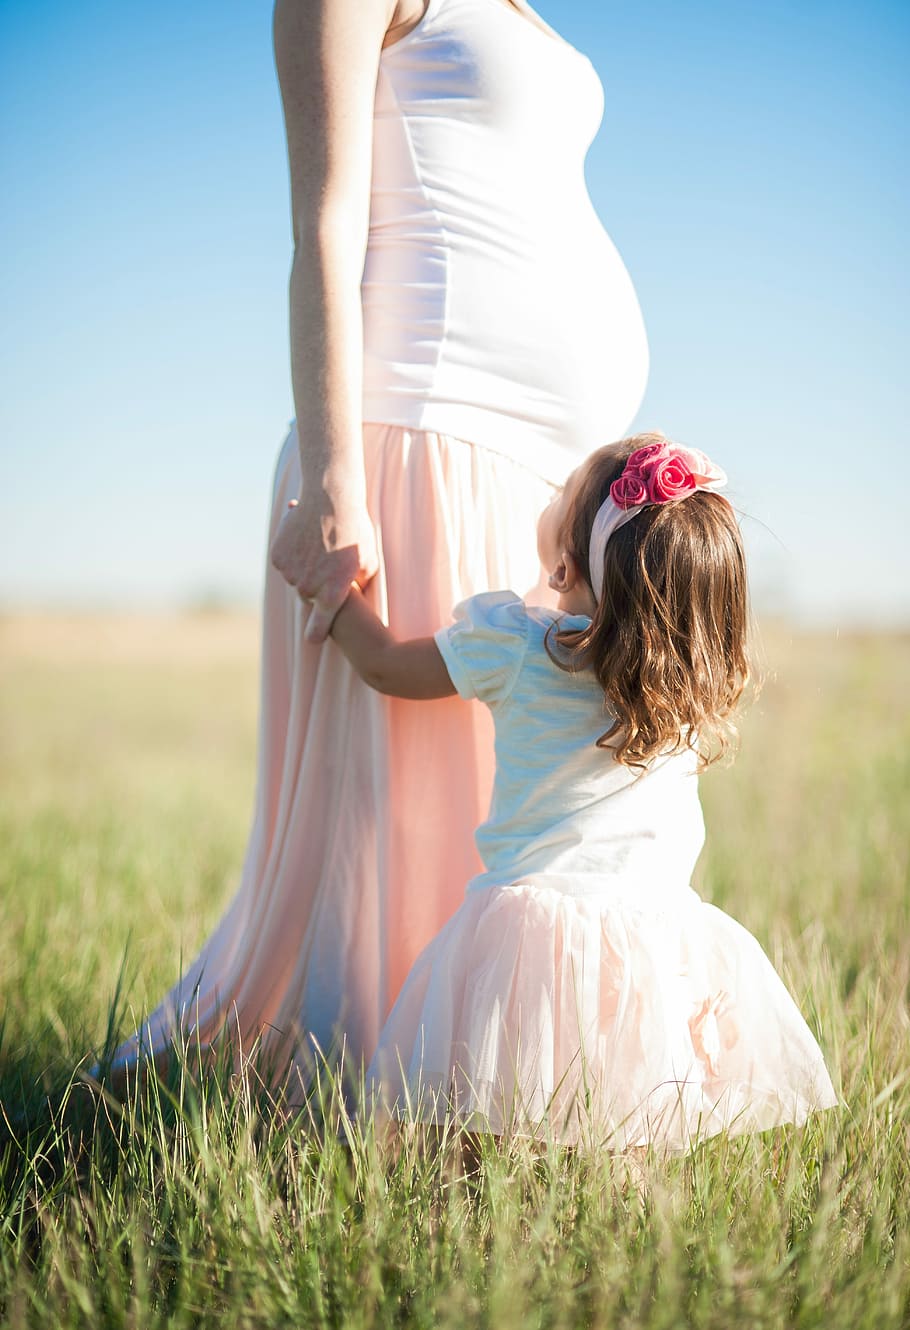 gadis, putih, pink, gaun lengan engah, hamil, ibu, berdiri, hijau, rumput, siang hari